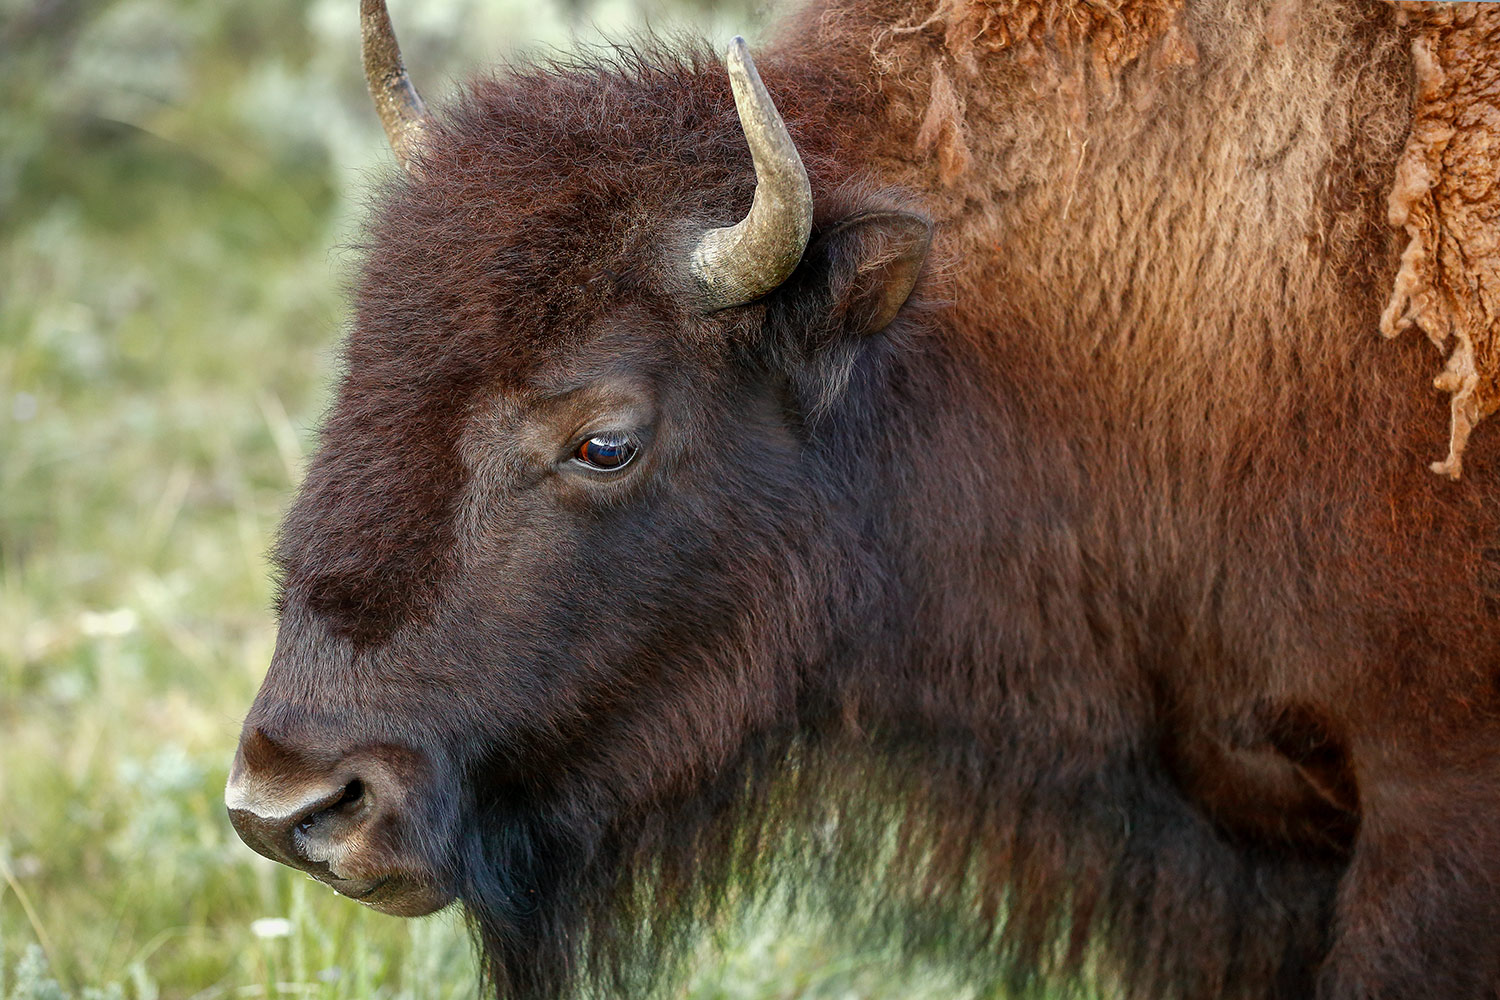 Video of herding buffalo photos at Fort Belknap Reservation